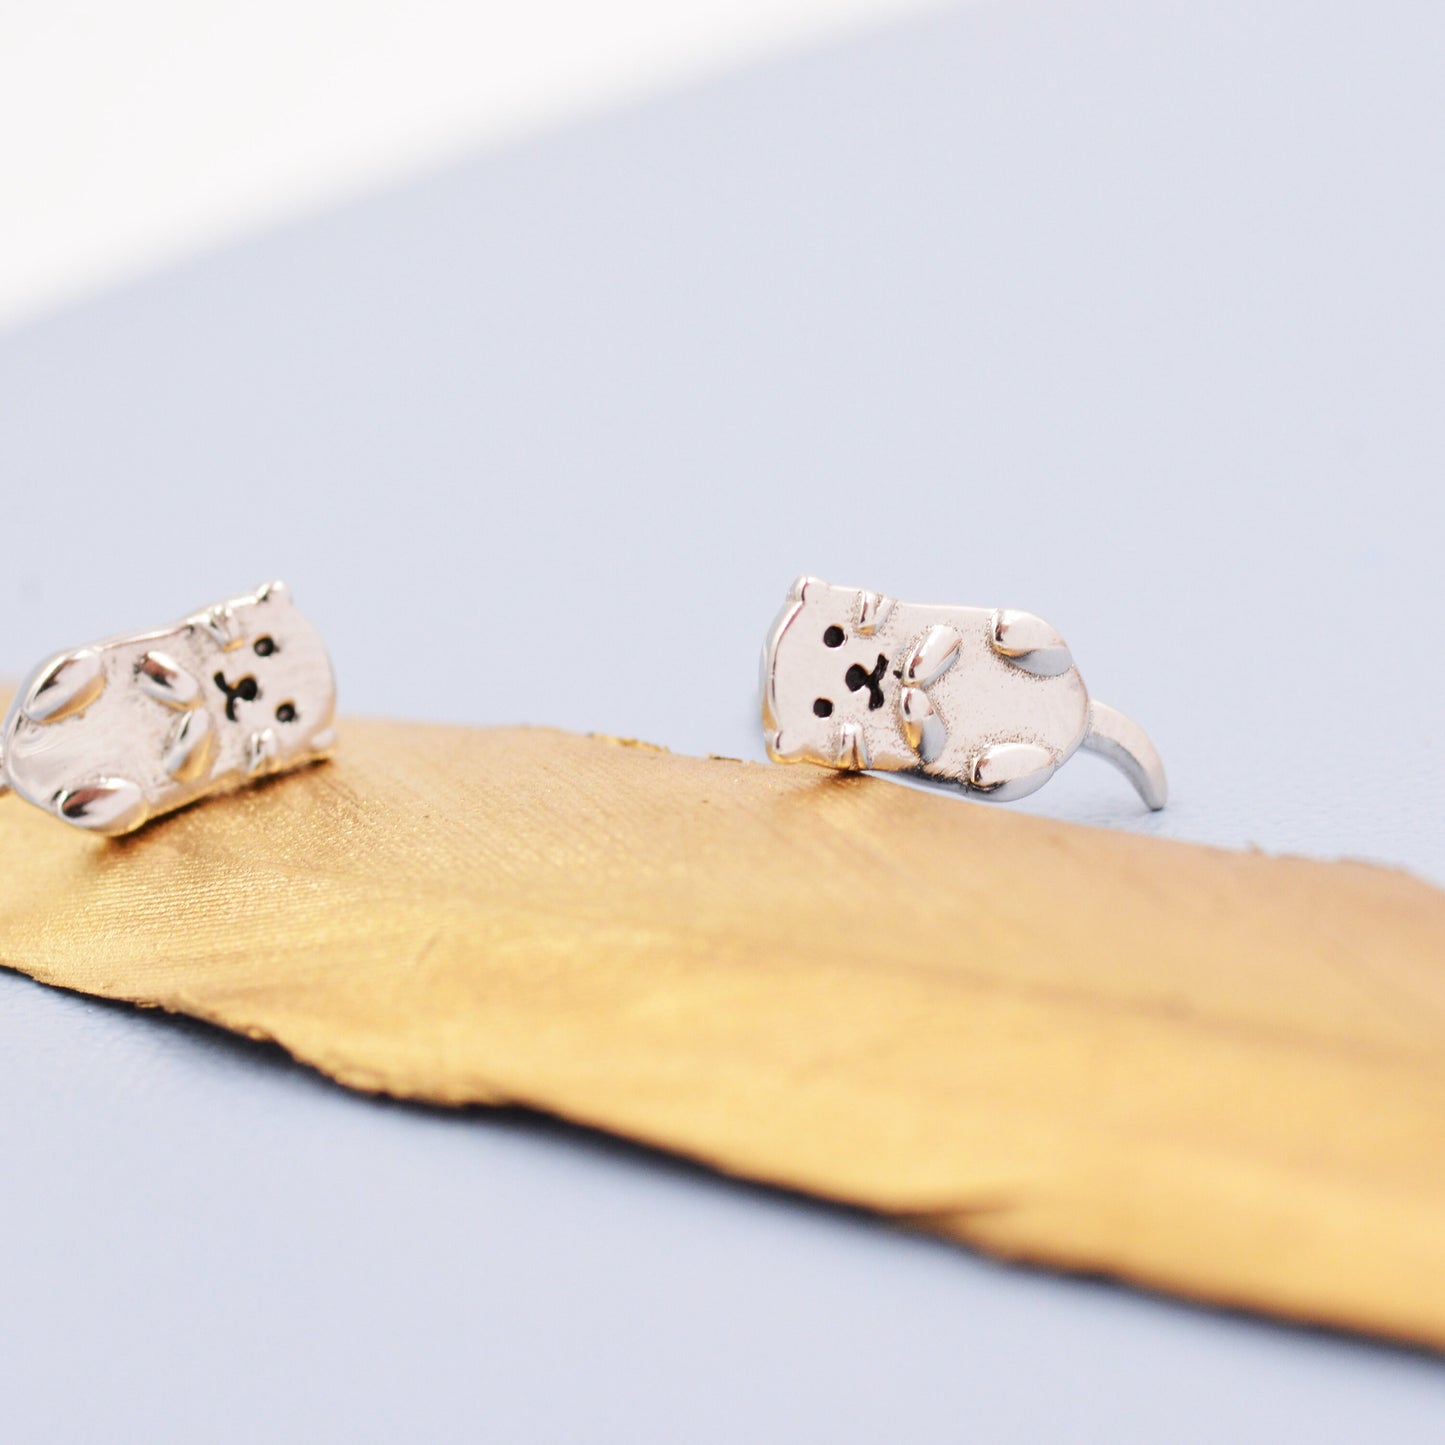 Otter Stud Earrings in Sterling Silver - Smiling Otter - Cute Animal Earrings -  Fun, Whimsical